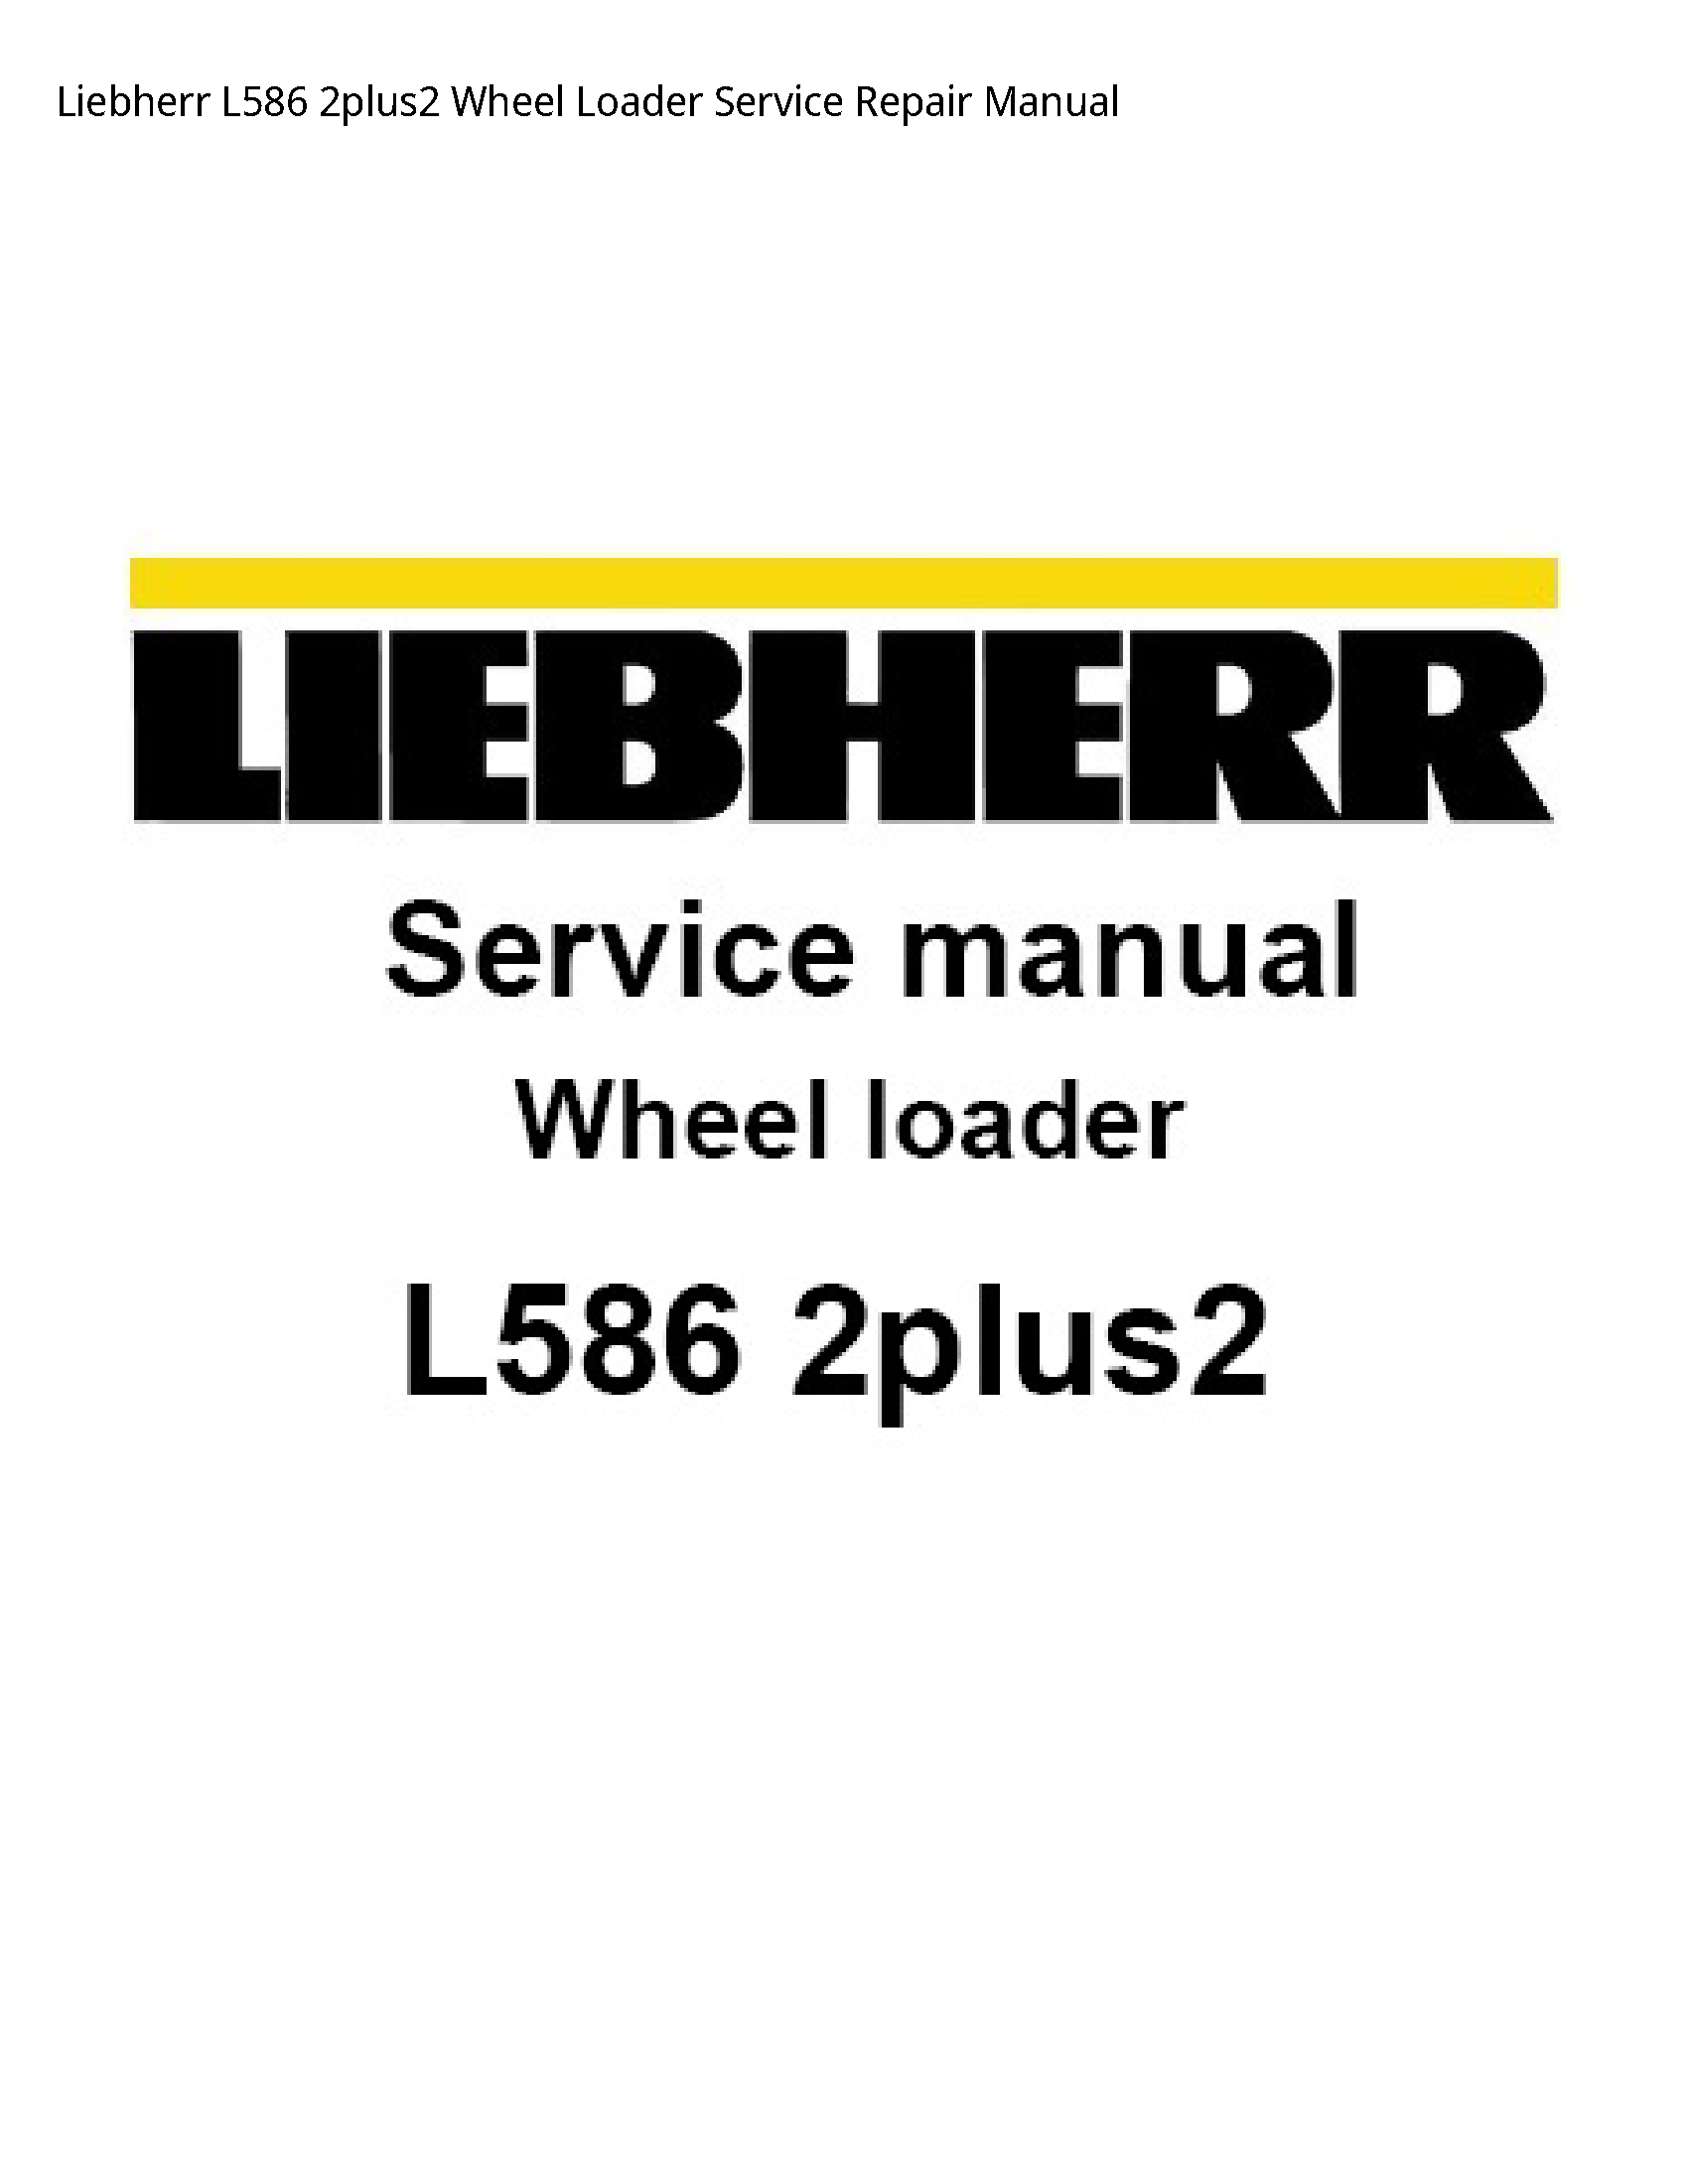 Liebherr L586 Wheel Loader manual